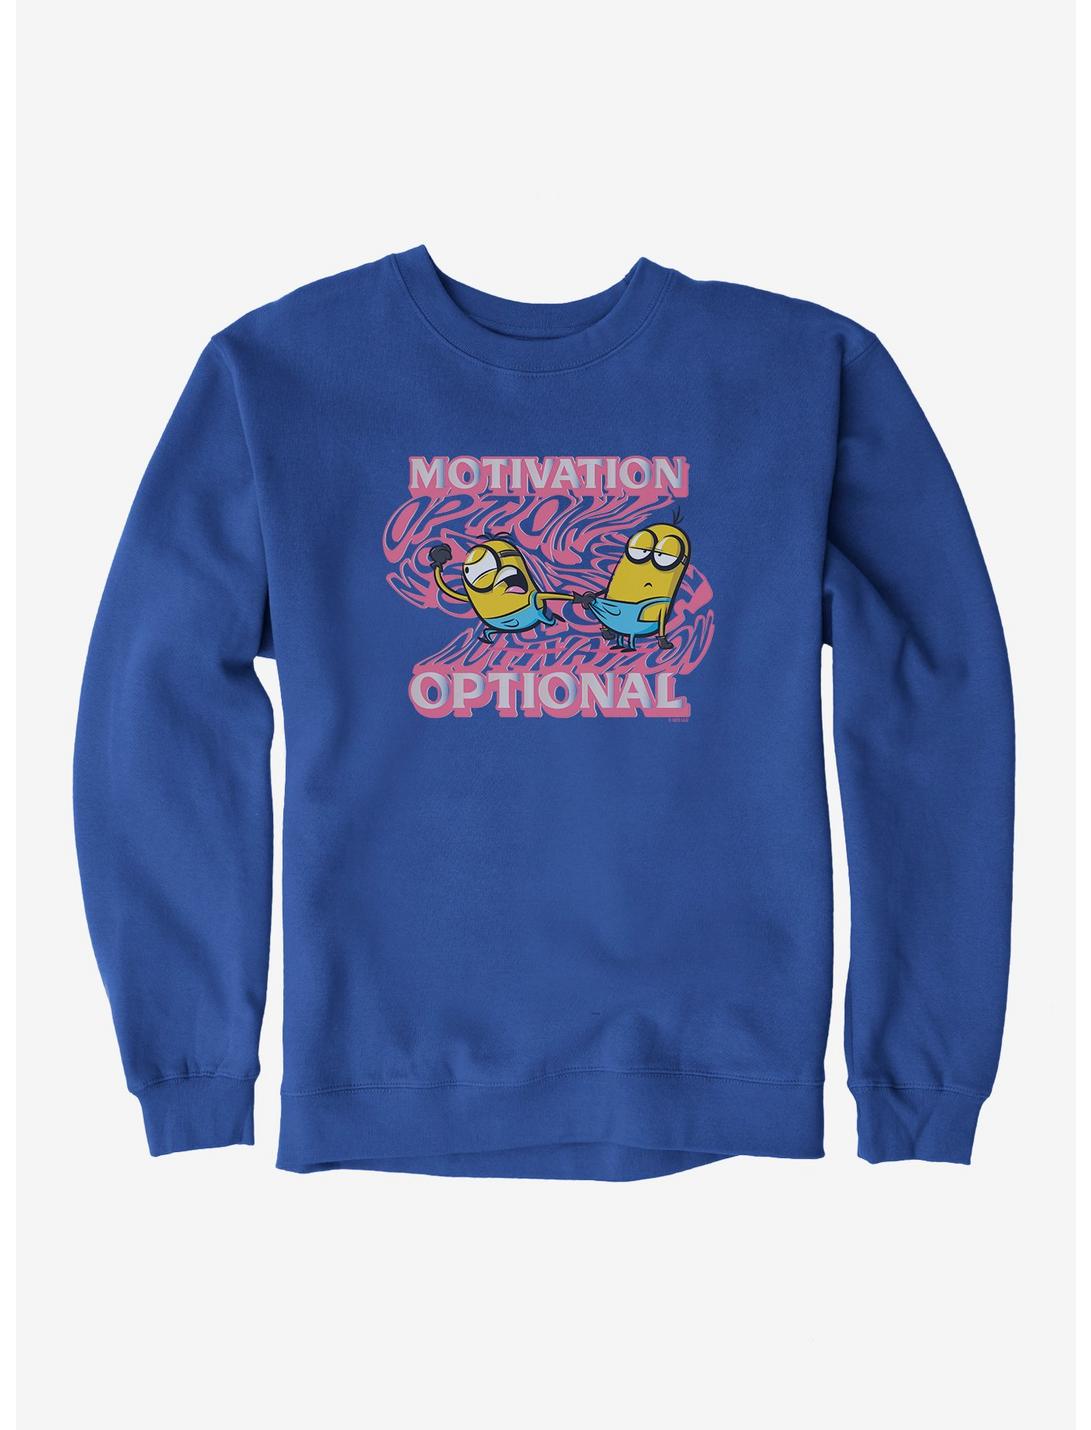 Minions Groovy Motivation Optional Sweatshirt, ROYAL BLUE, hi-res